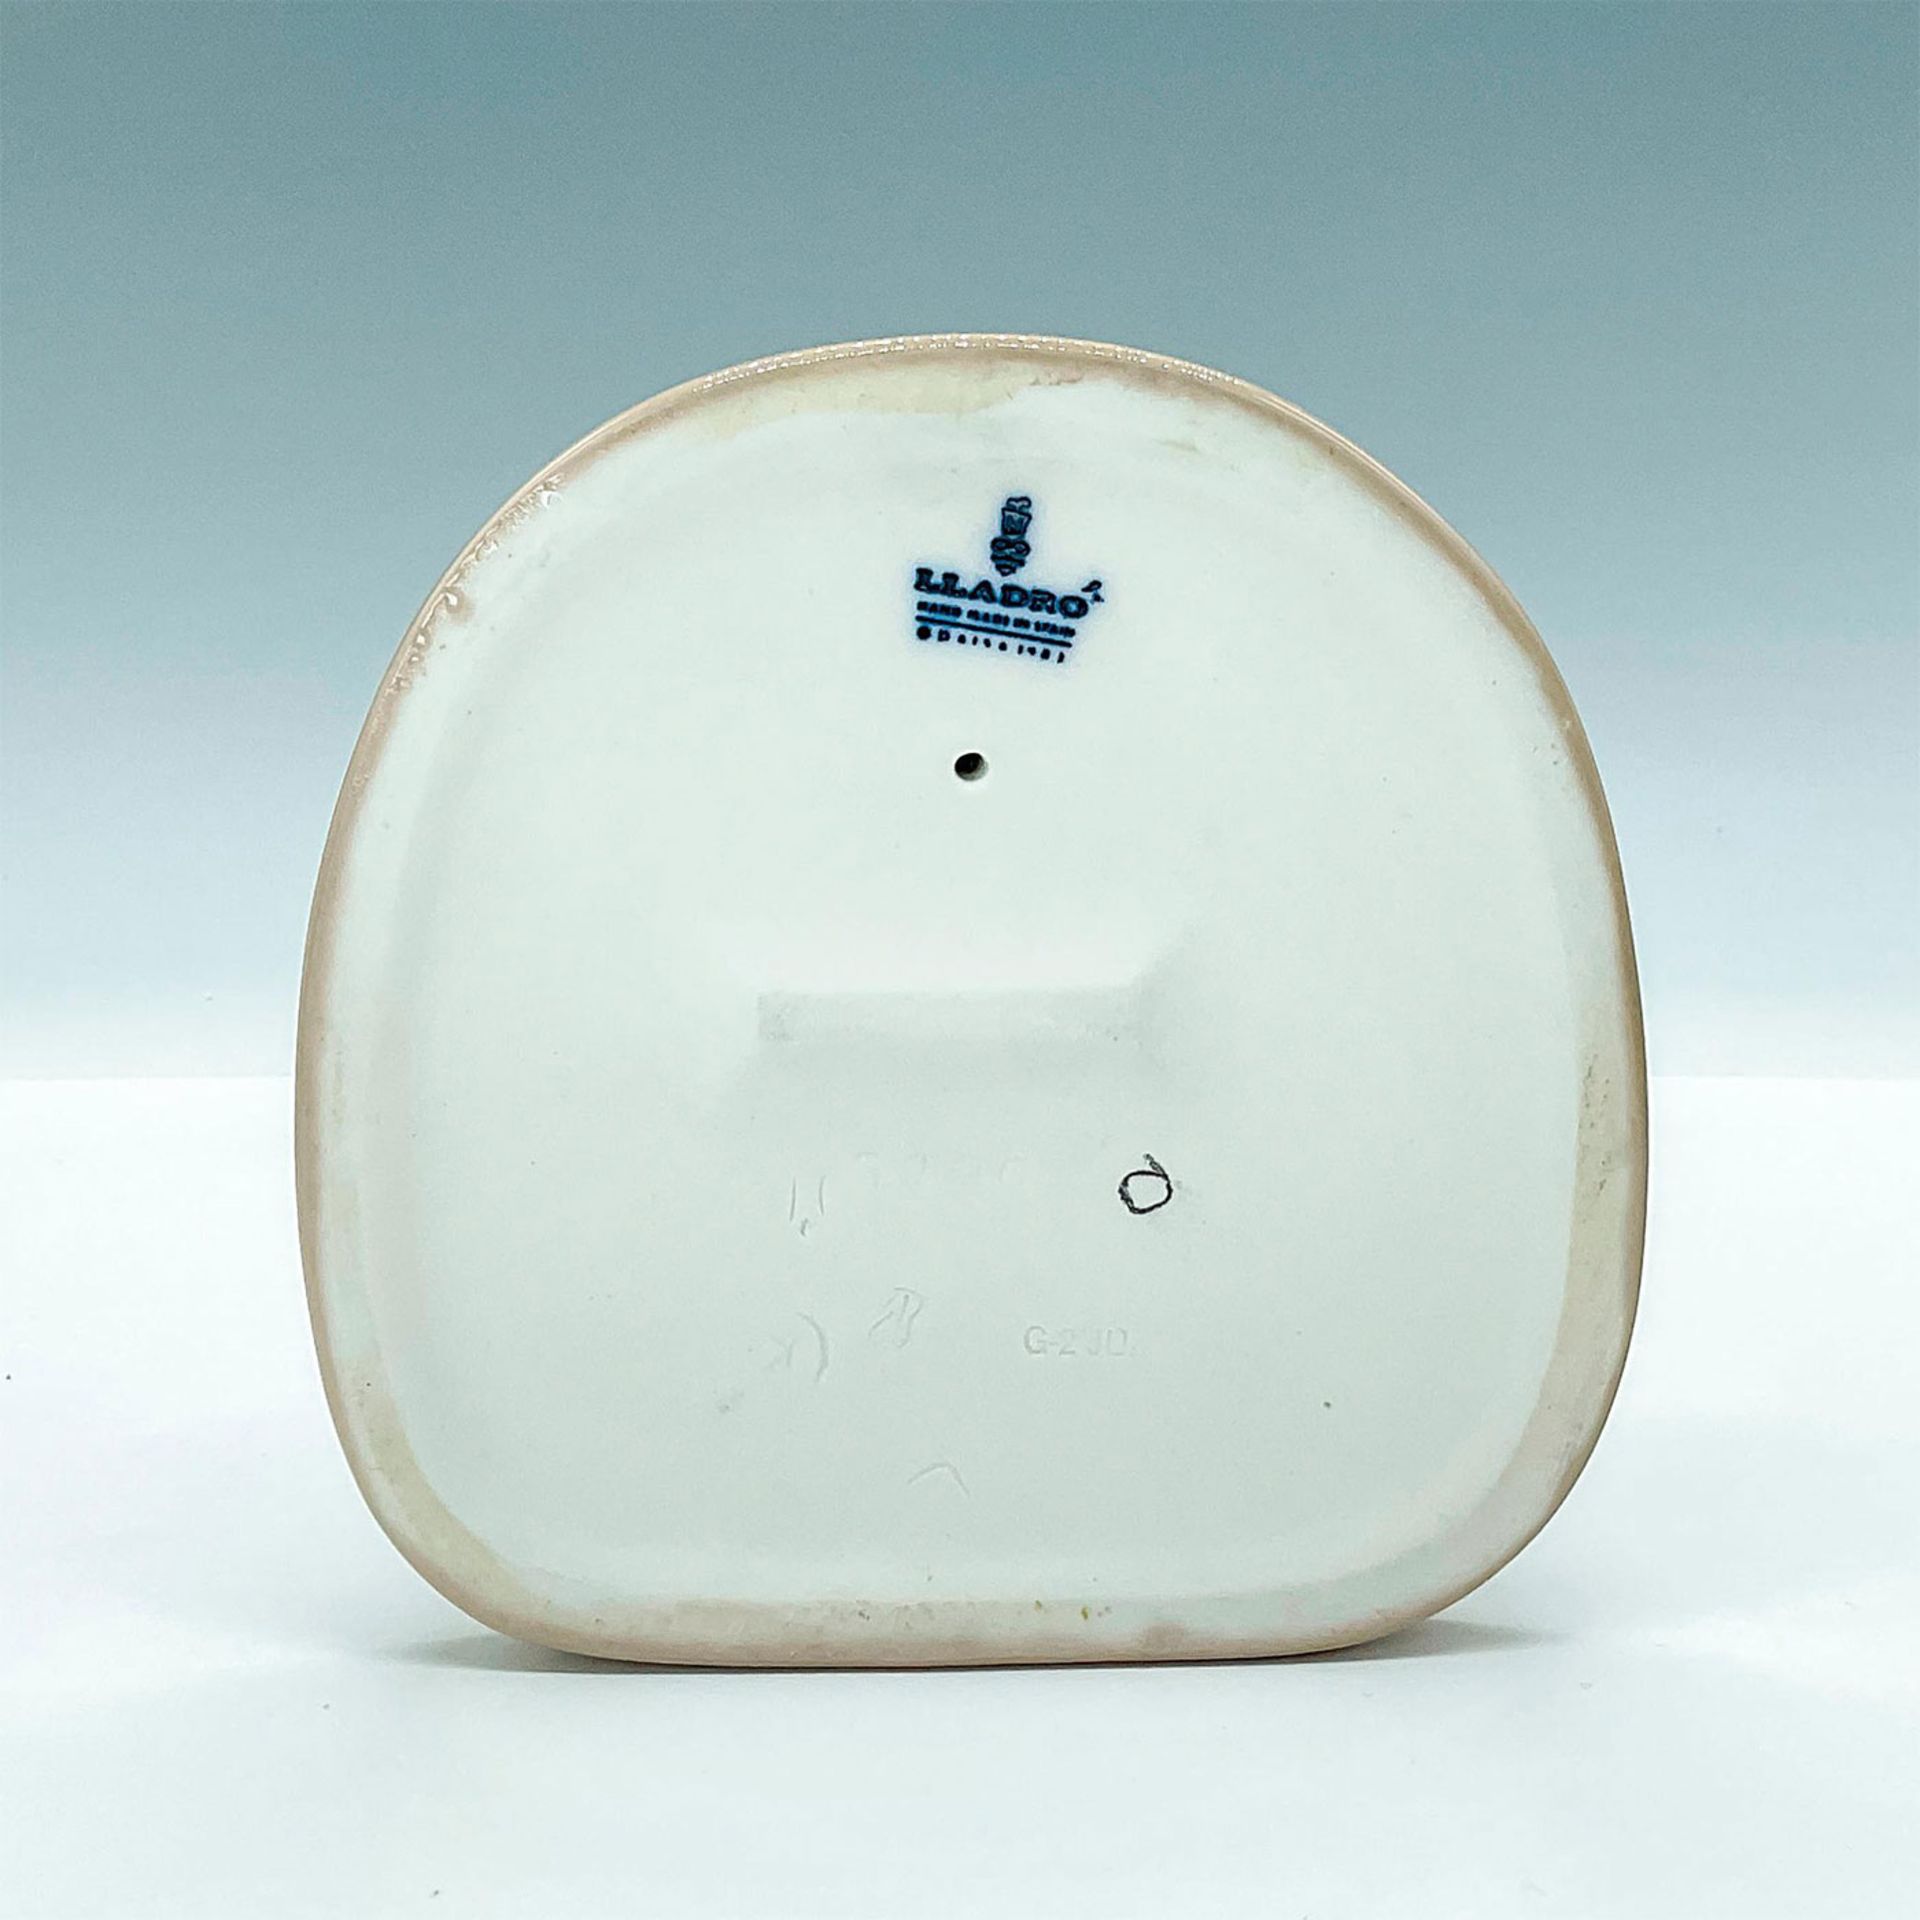 Yachtsman 1005206 - Lladro Porcelain Figurine - Image 3 of 3